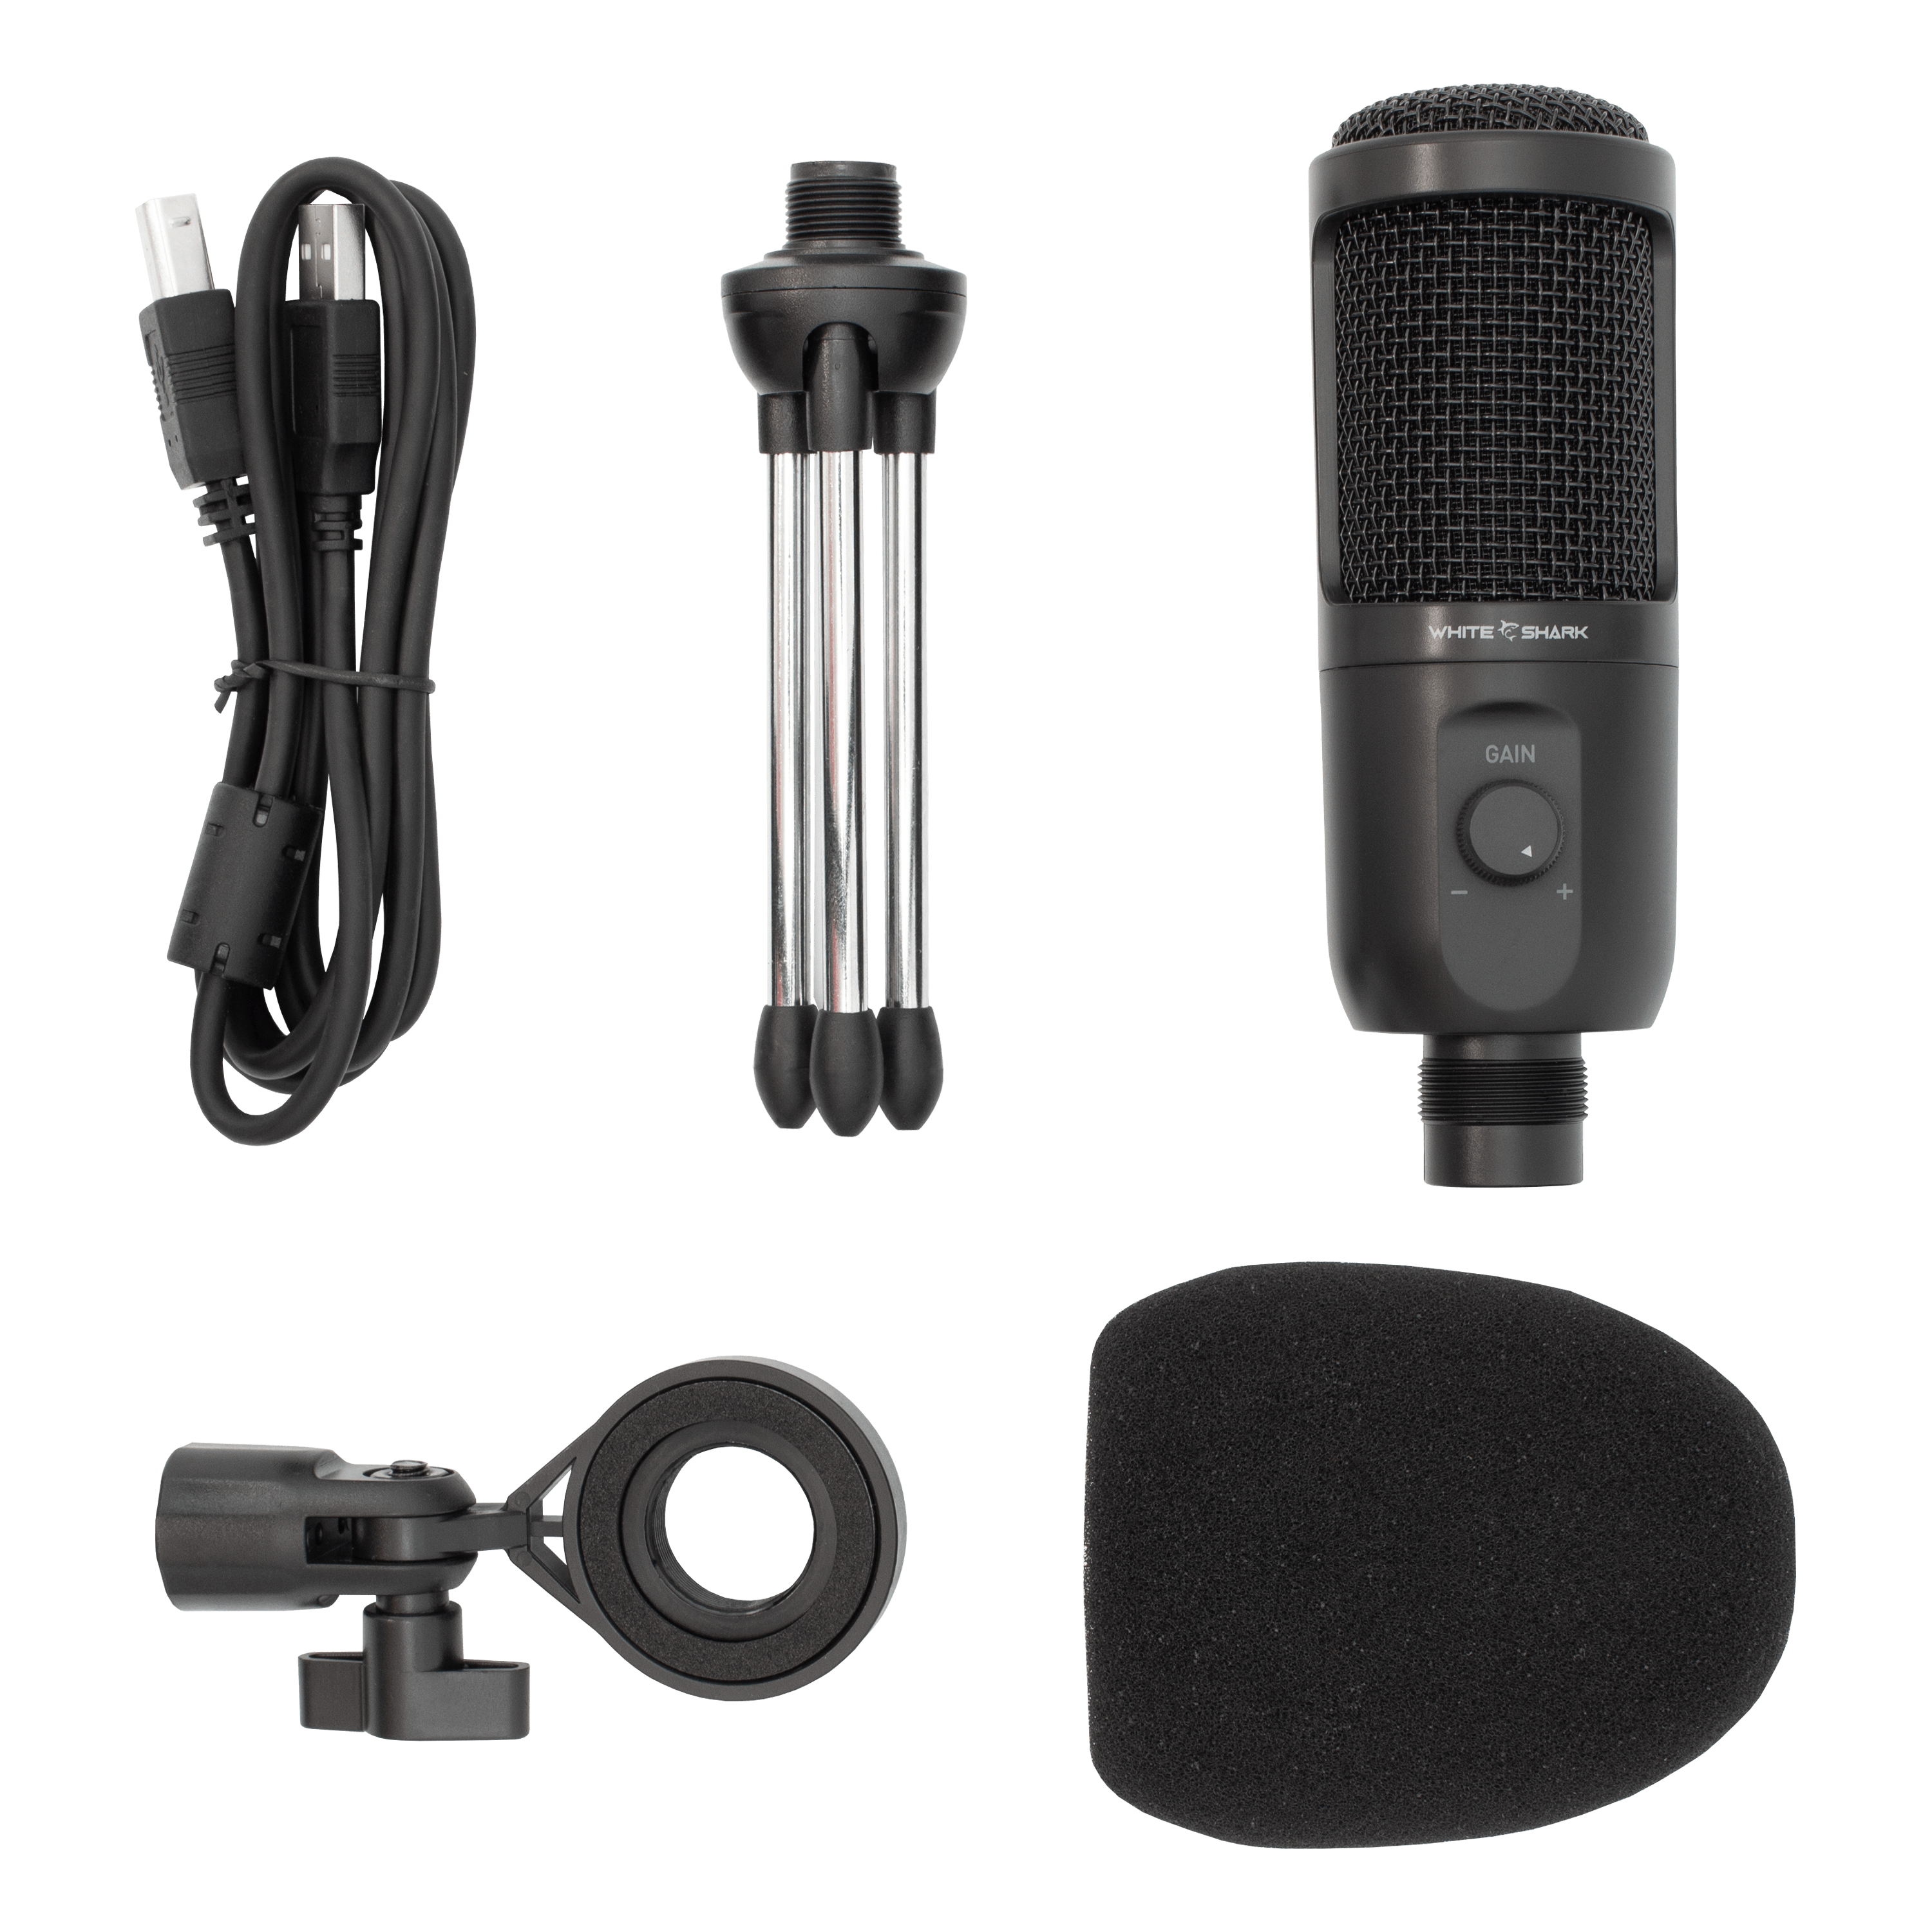 White Shark TAUS Podcasting Microphone Kit - Black - GameStore.mt | Powered by Flutisat